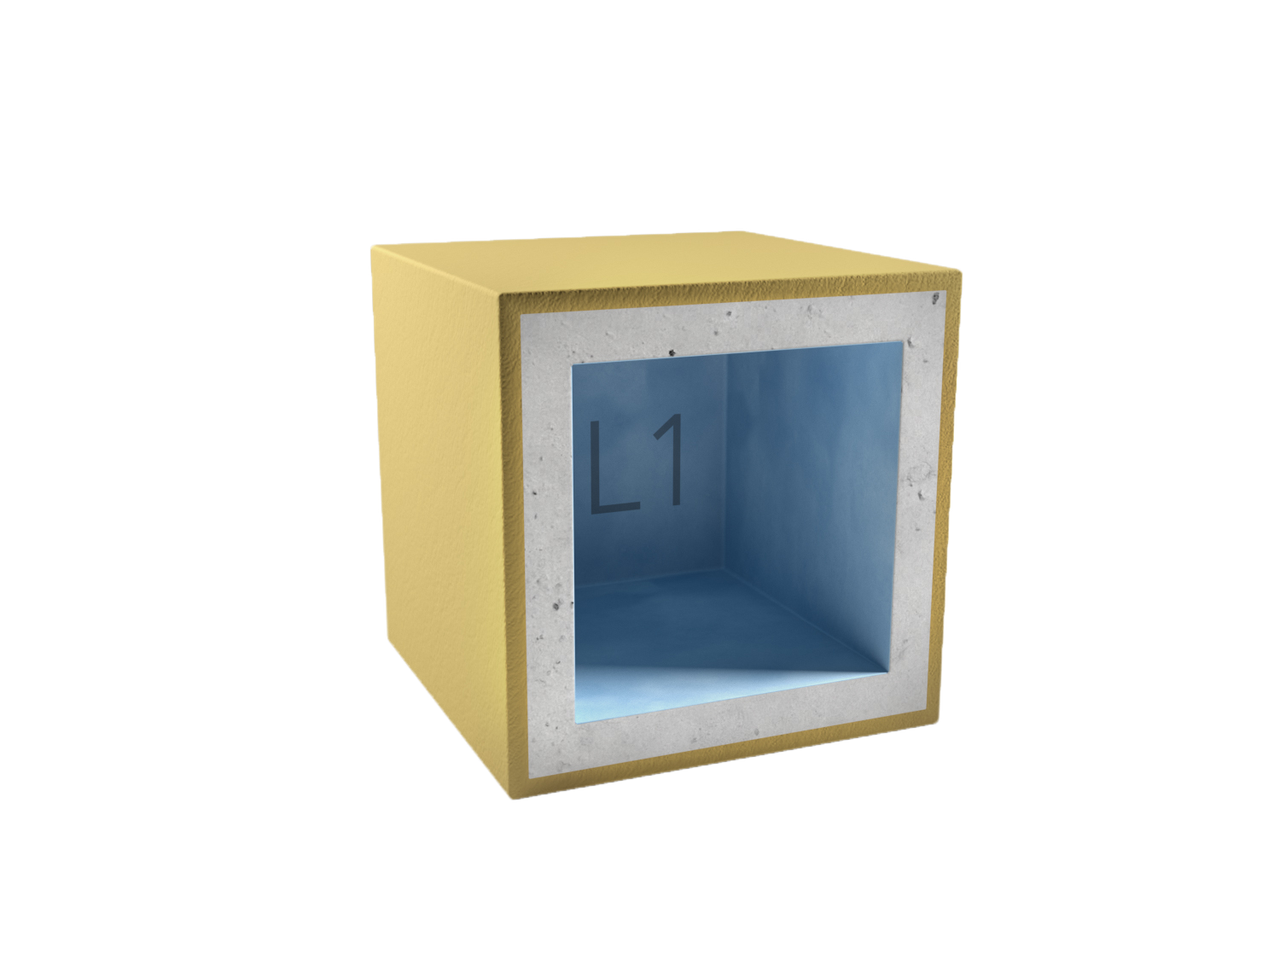 Короб для светильника АкусикГипс Бокс (AcousticGyps Box) L1 (150 x 150 x 100мм)